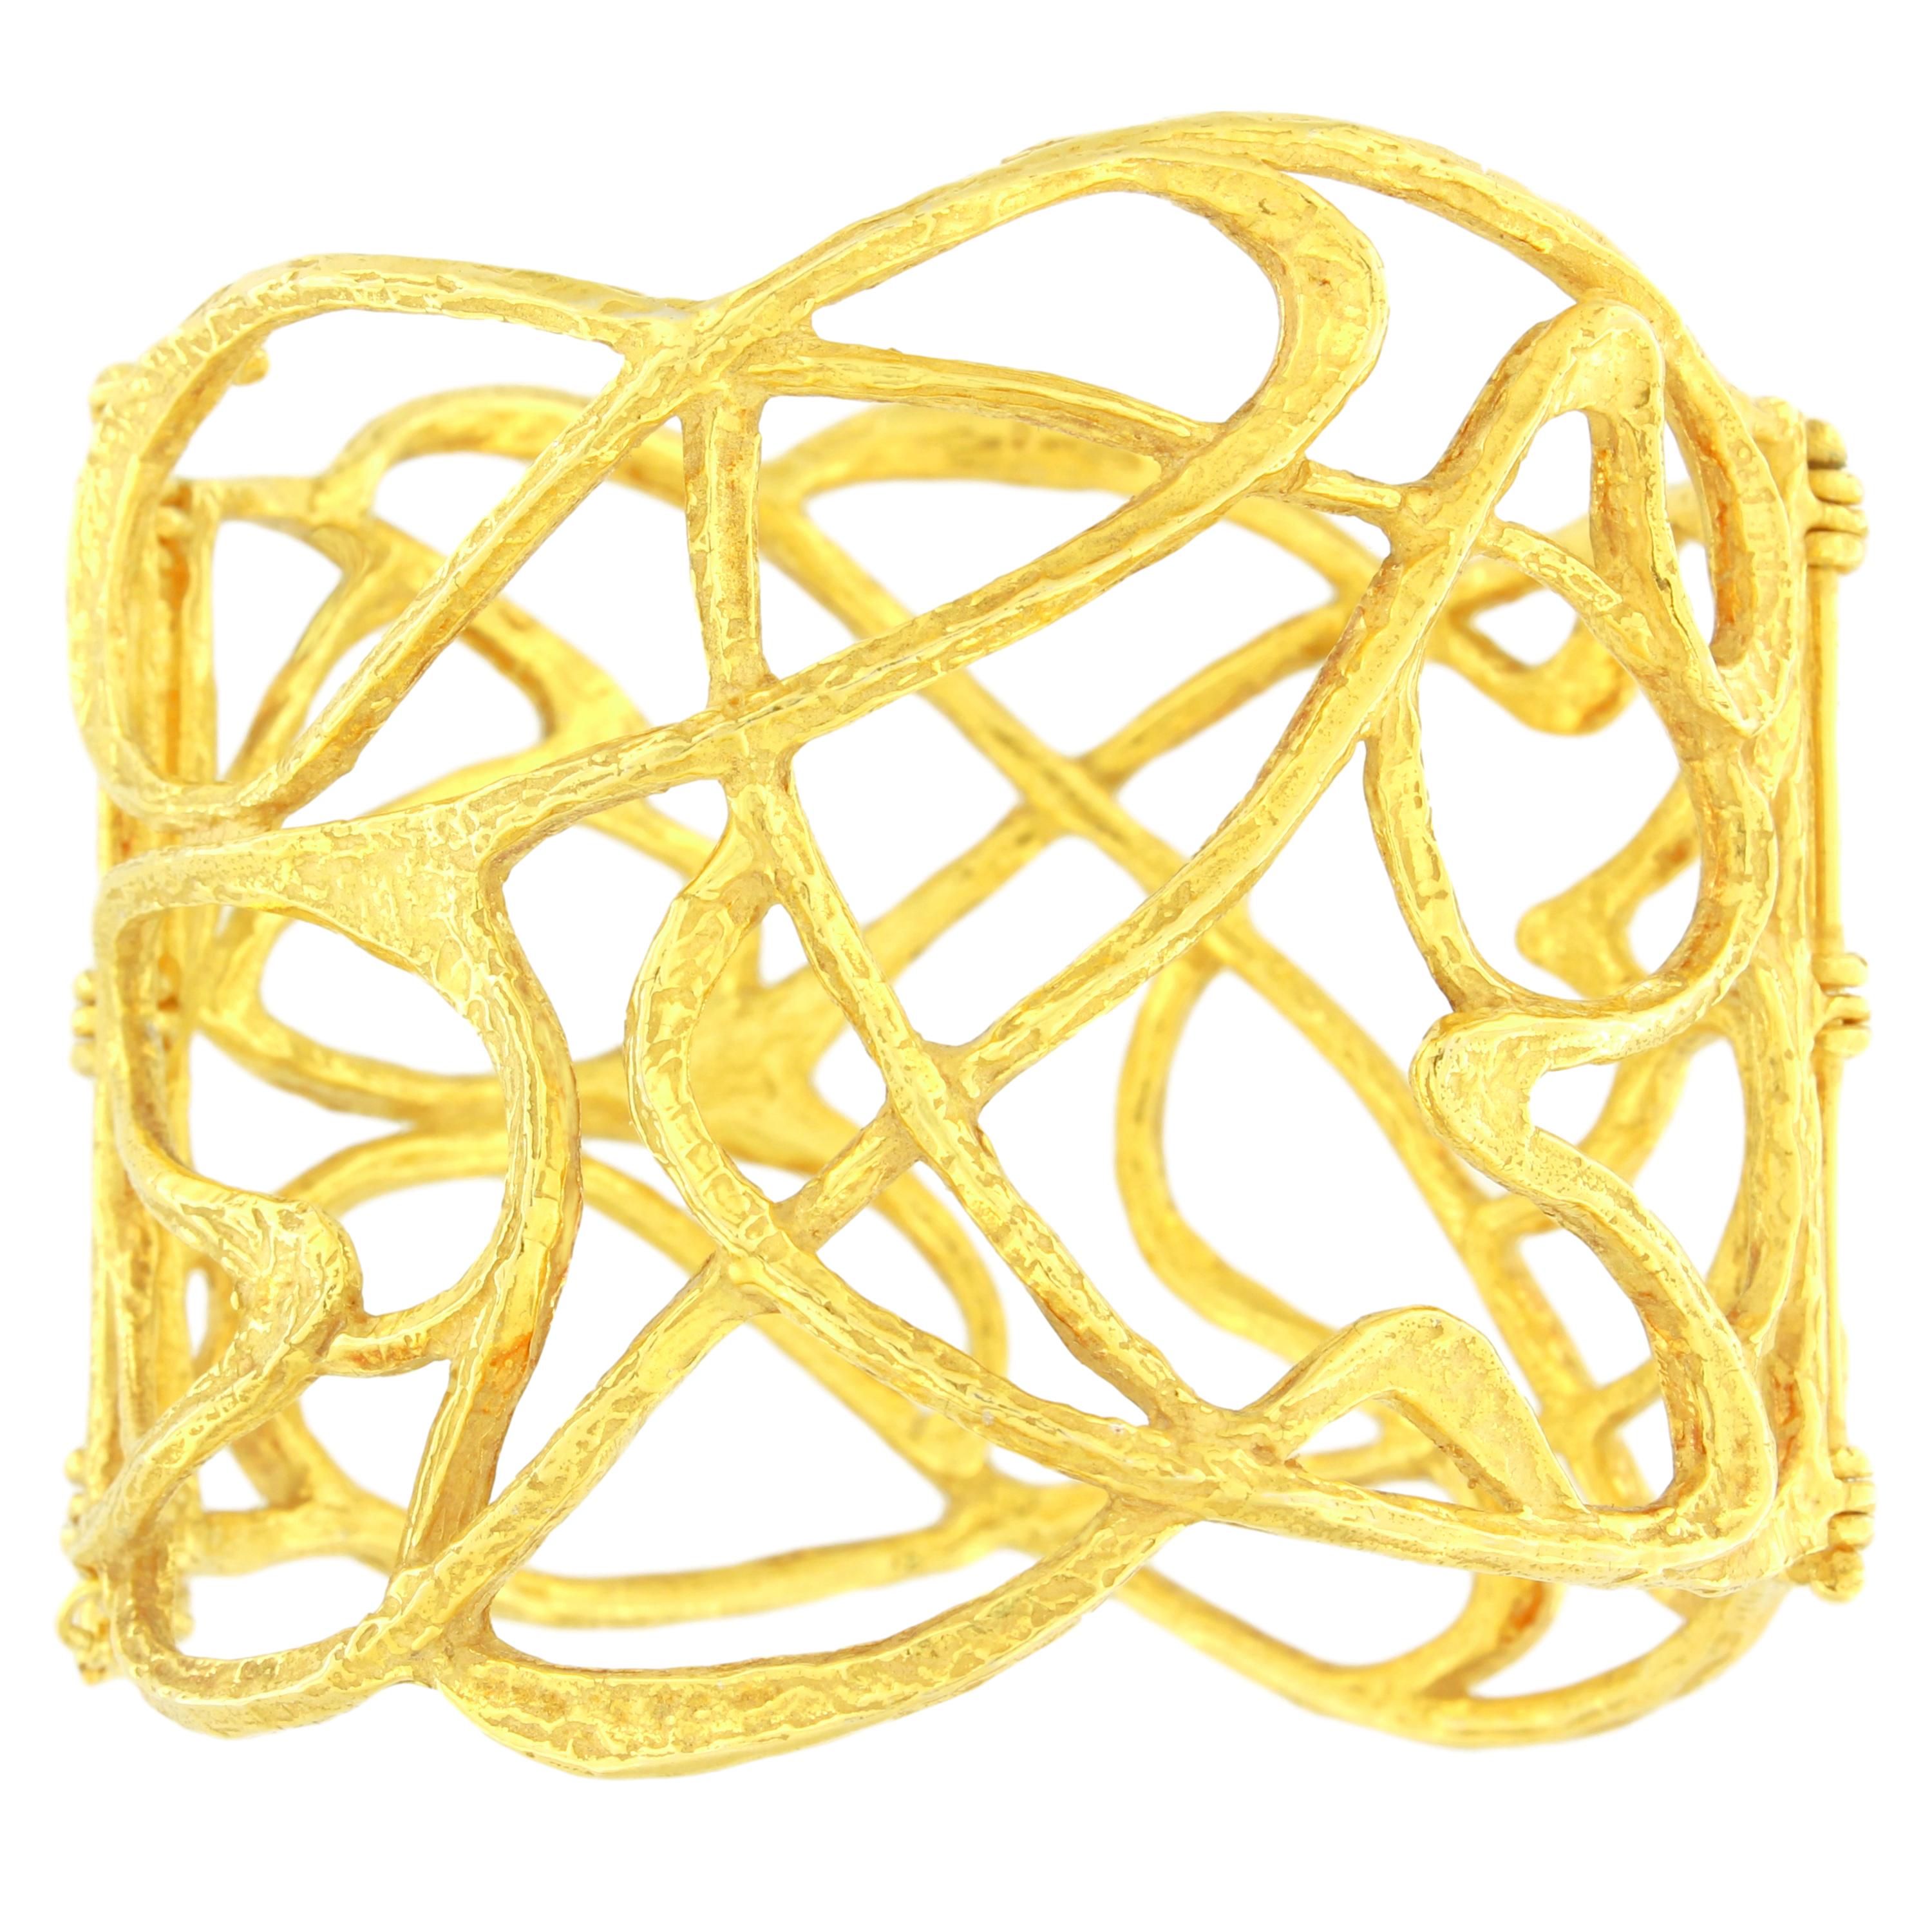 Sacchi Art Deco Style Wire Cuff Bracelet 18 Karat Satin Yellow Gold